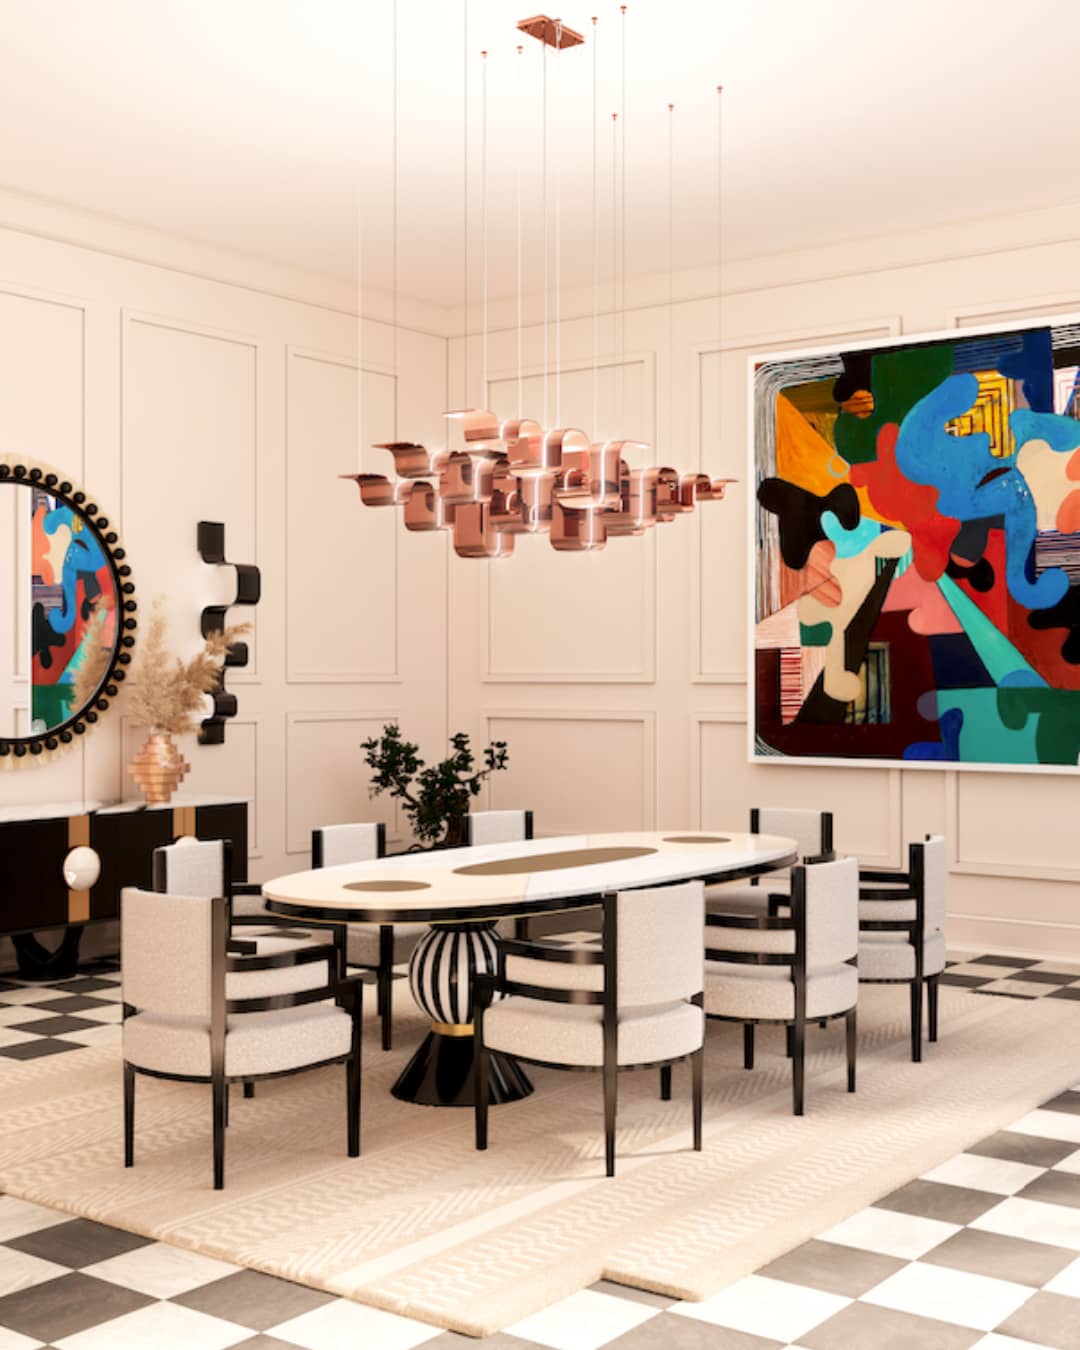 Unique furniture design for art deco or a modern dining room decor by HOMMÉS Studio